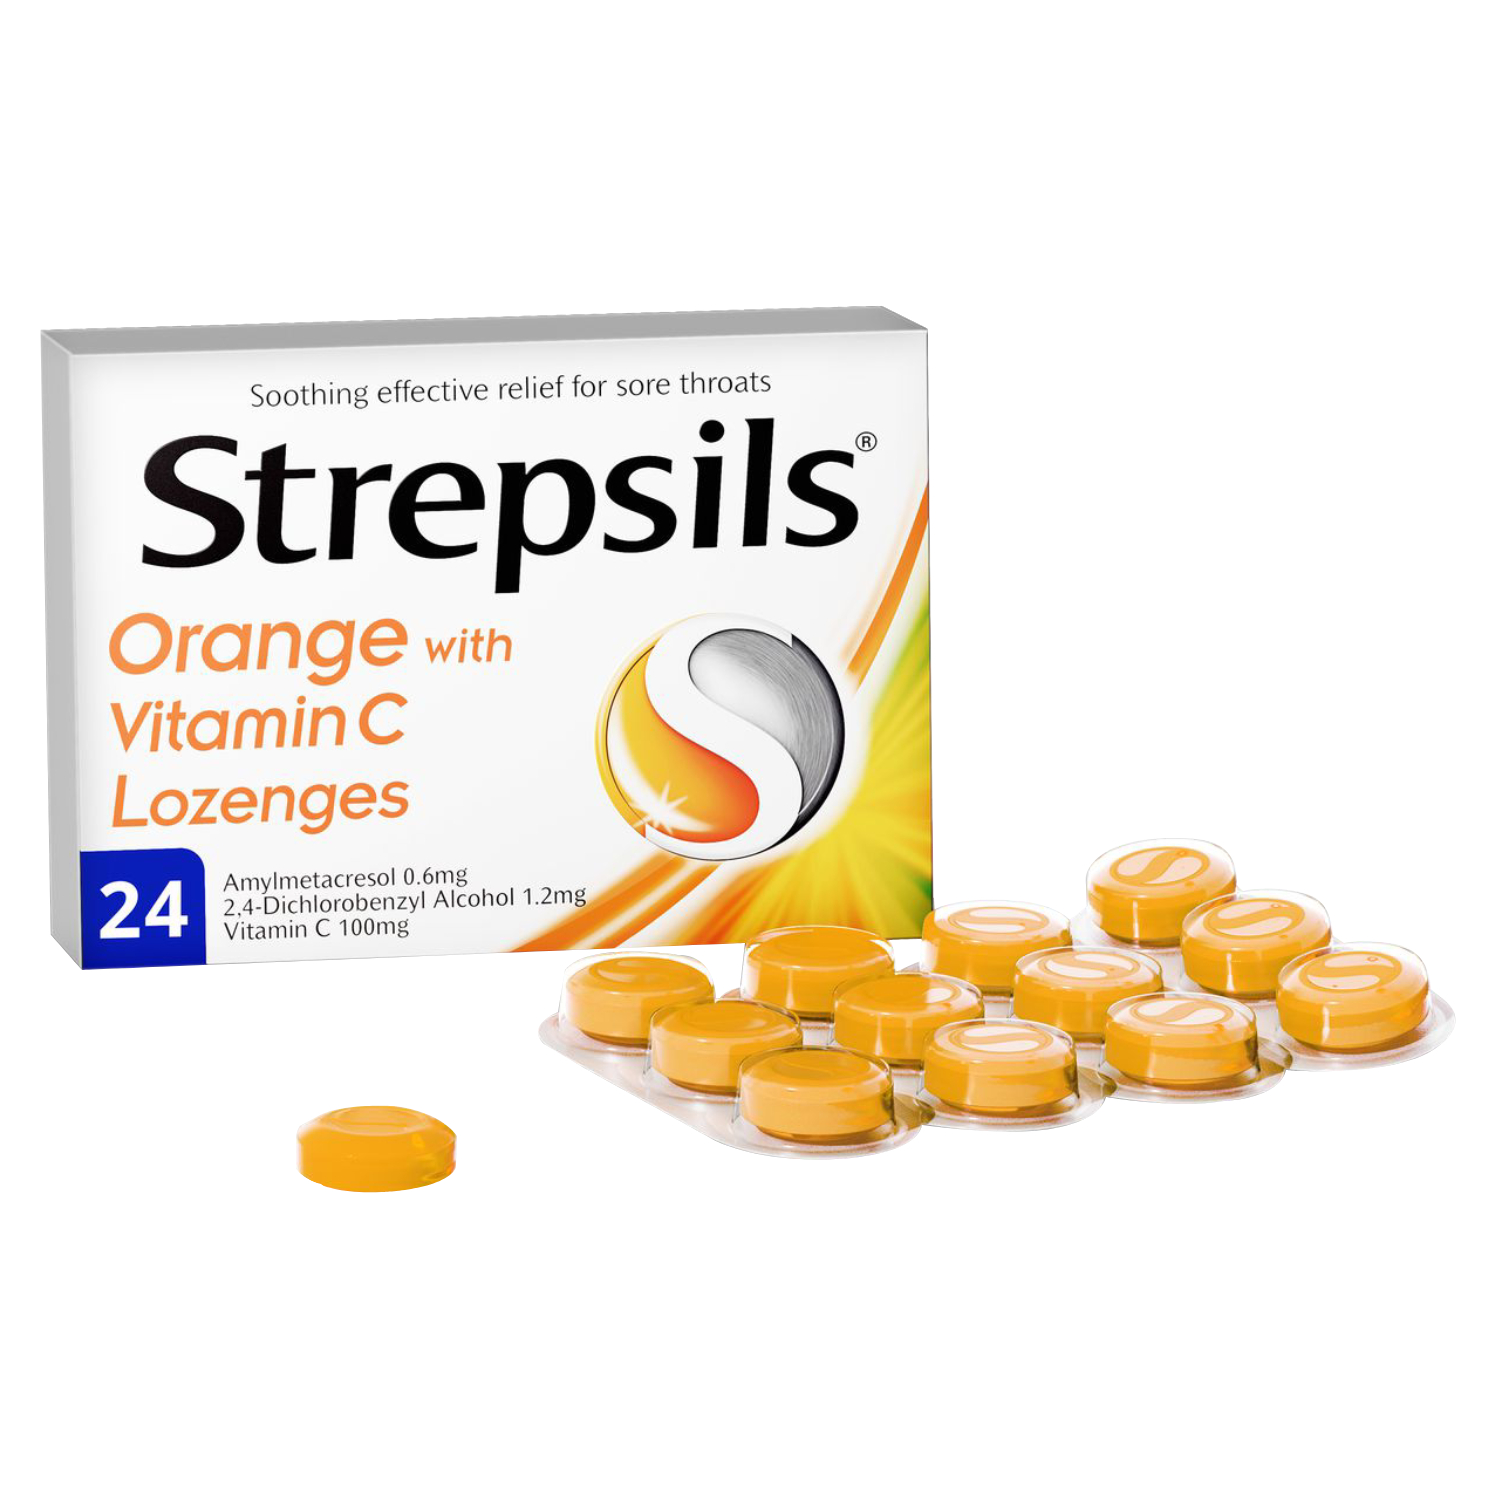 Back Image for Strepsils Orange with Vitamin C 100mg Lozenges 24's